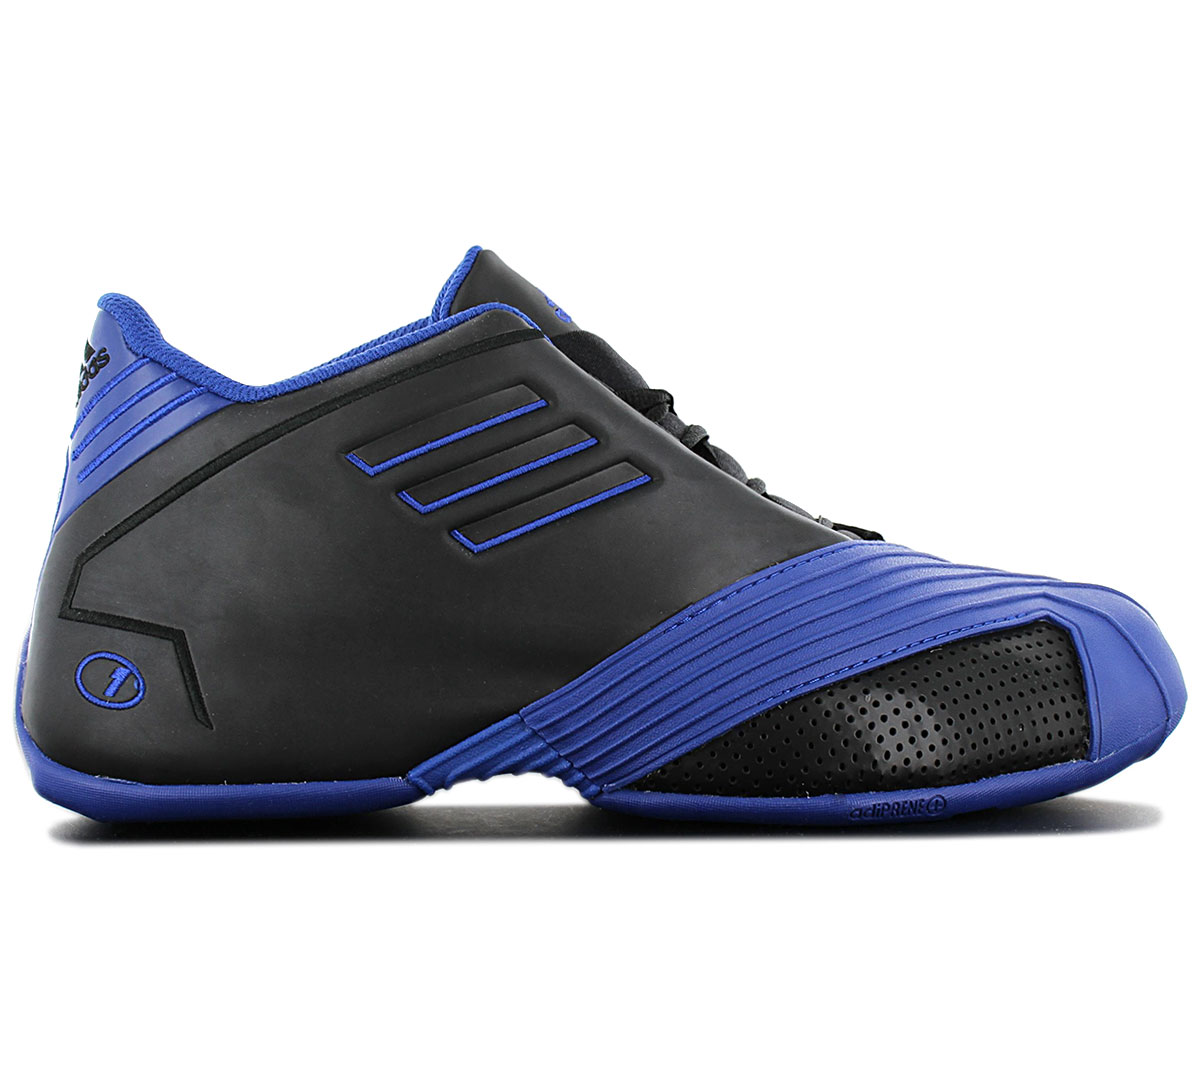 Adidas T-Mac 1 Retro pack - Tracy Mcgrady - EE6843 Men's Basketball Shoes  New | eBay